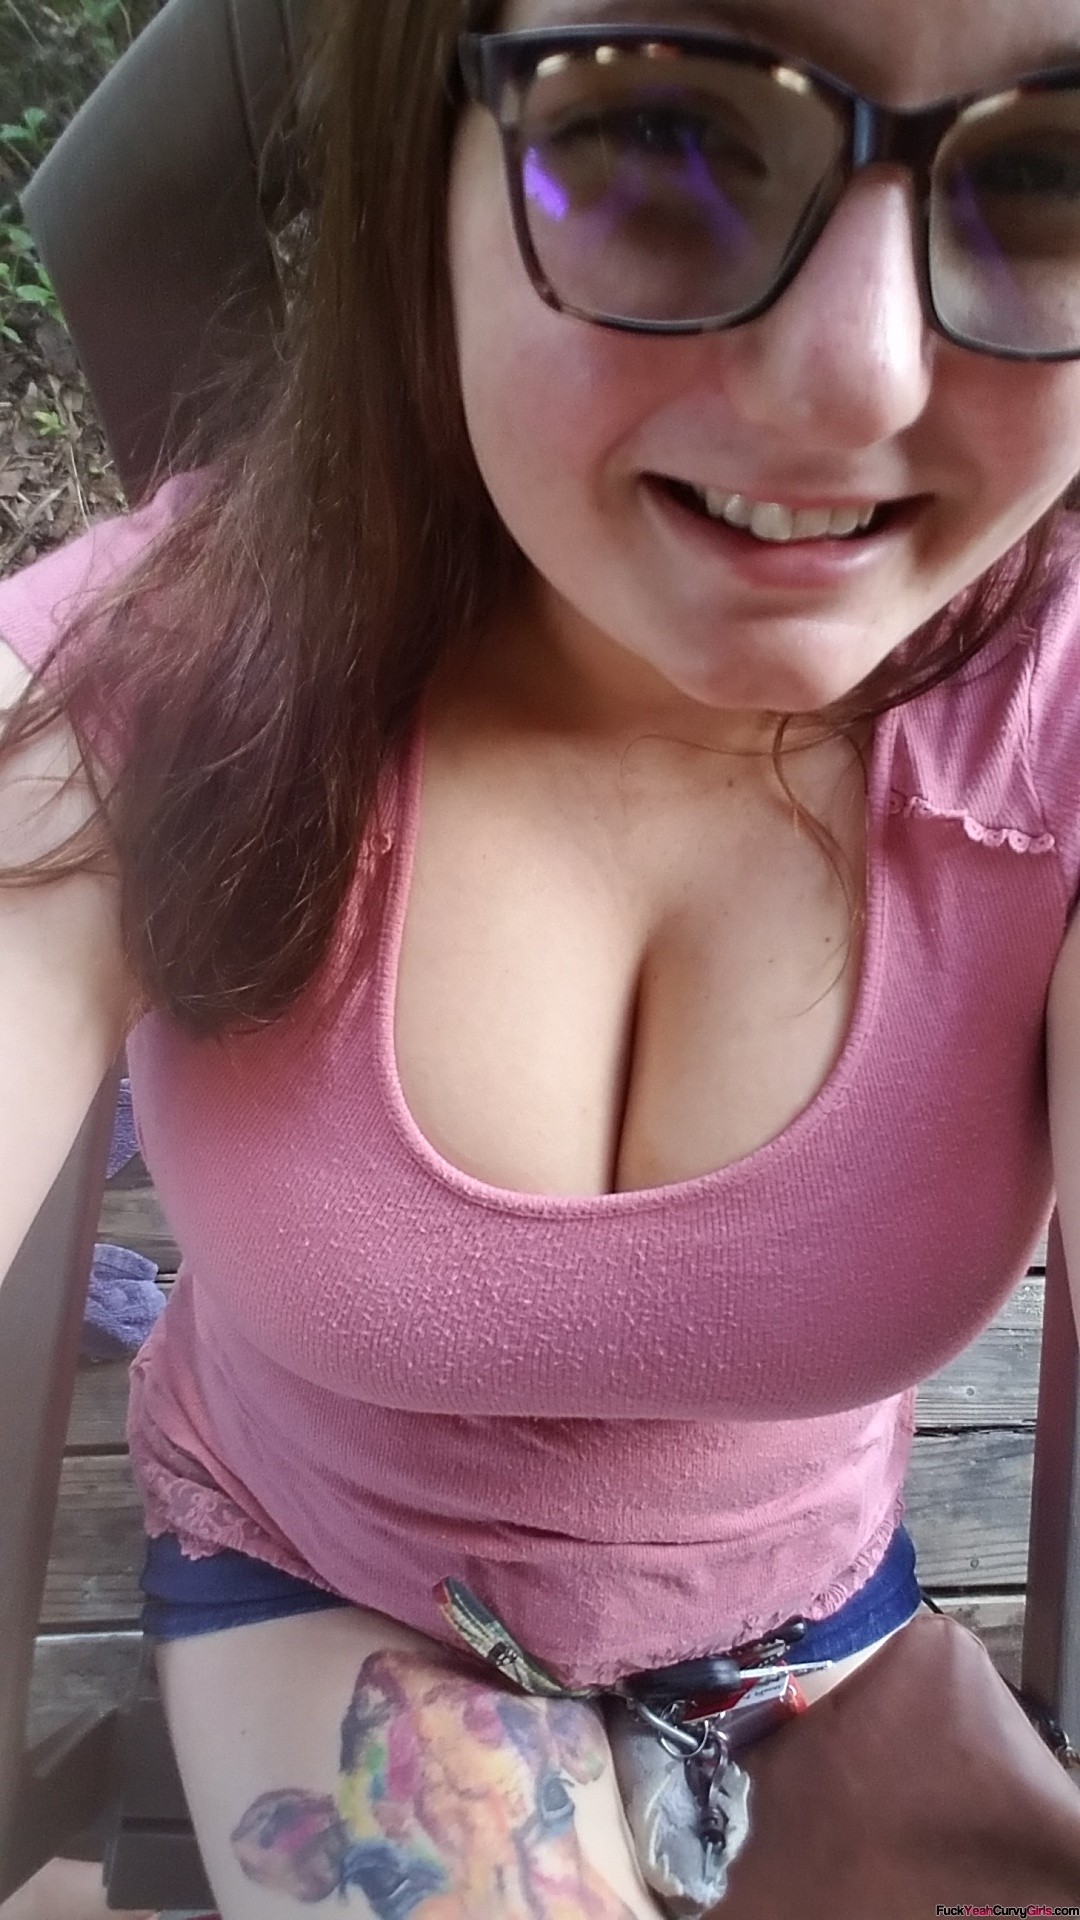 selfie chubby big tit girls amateurs free photo